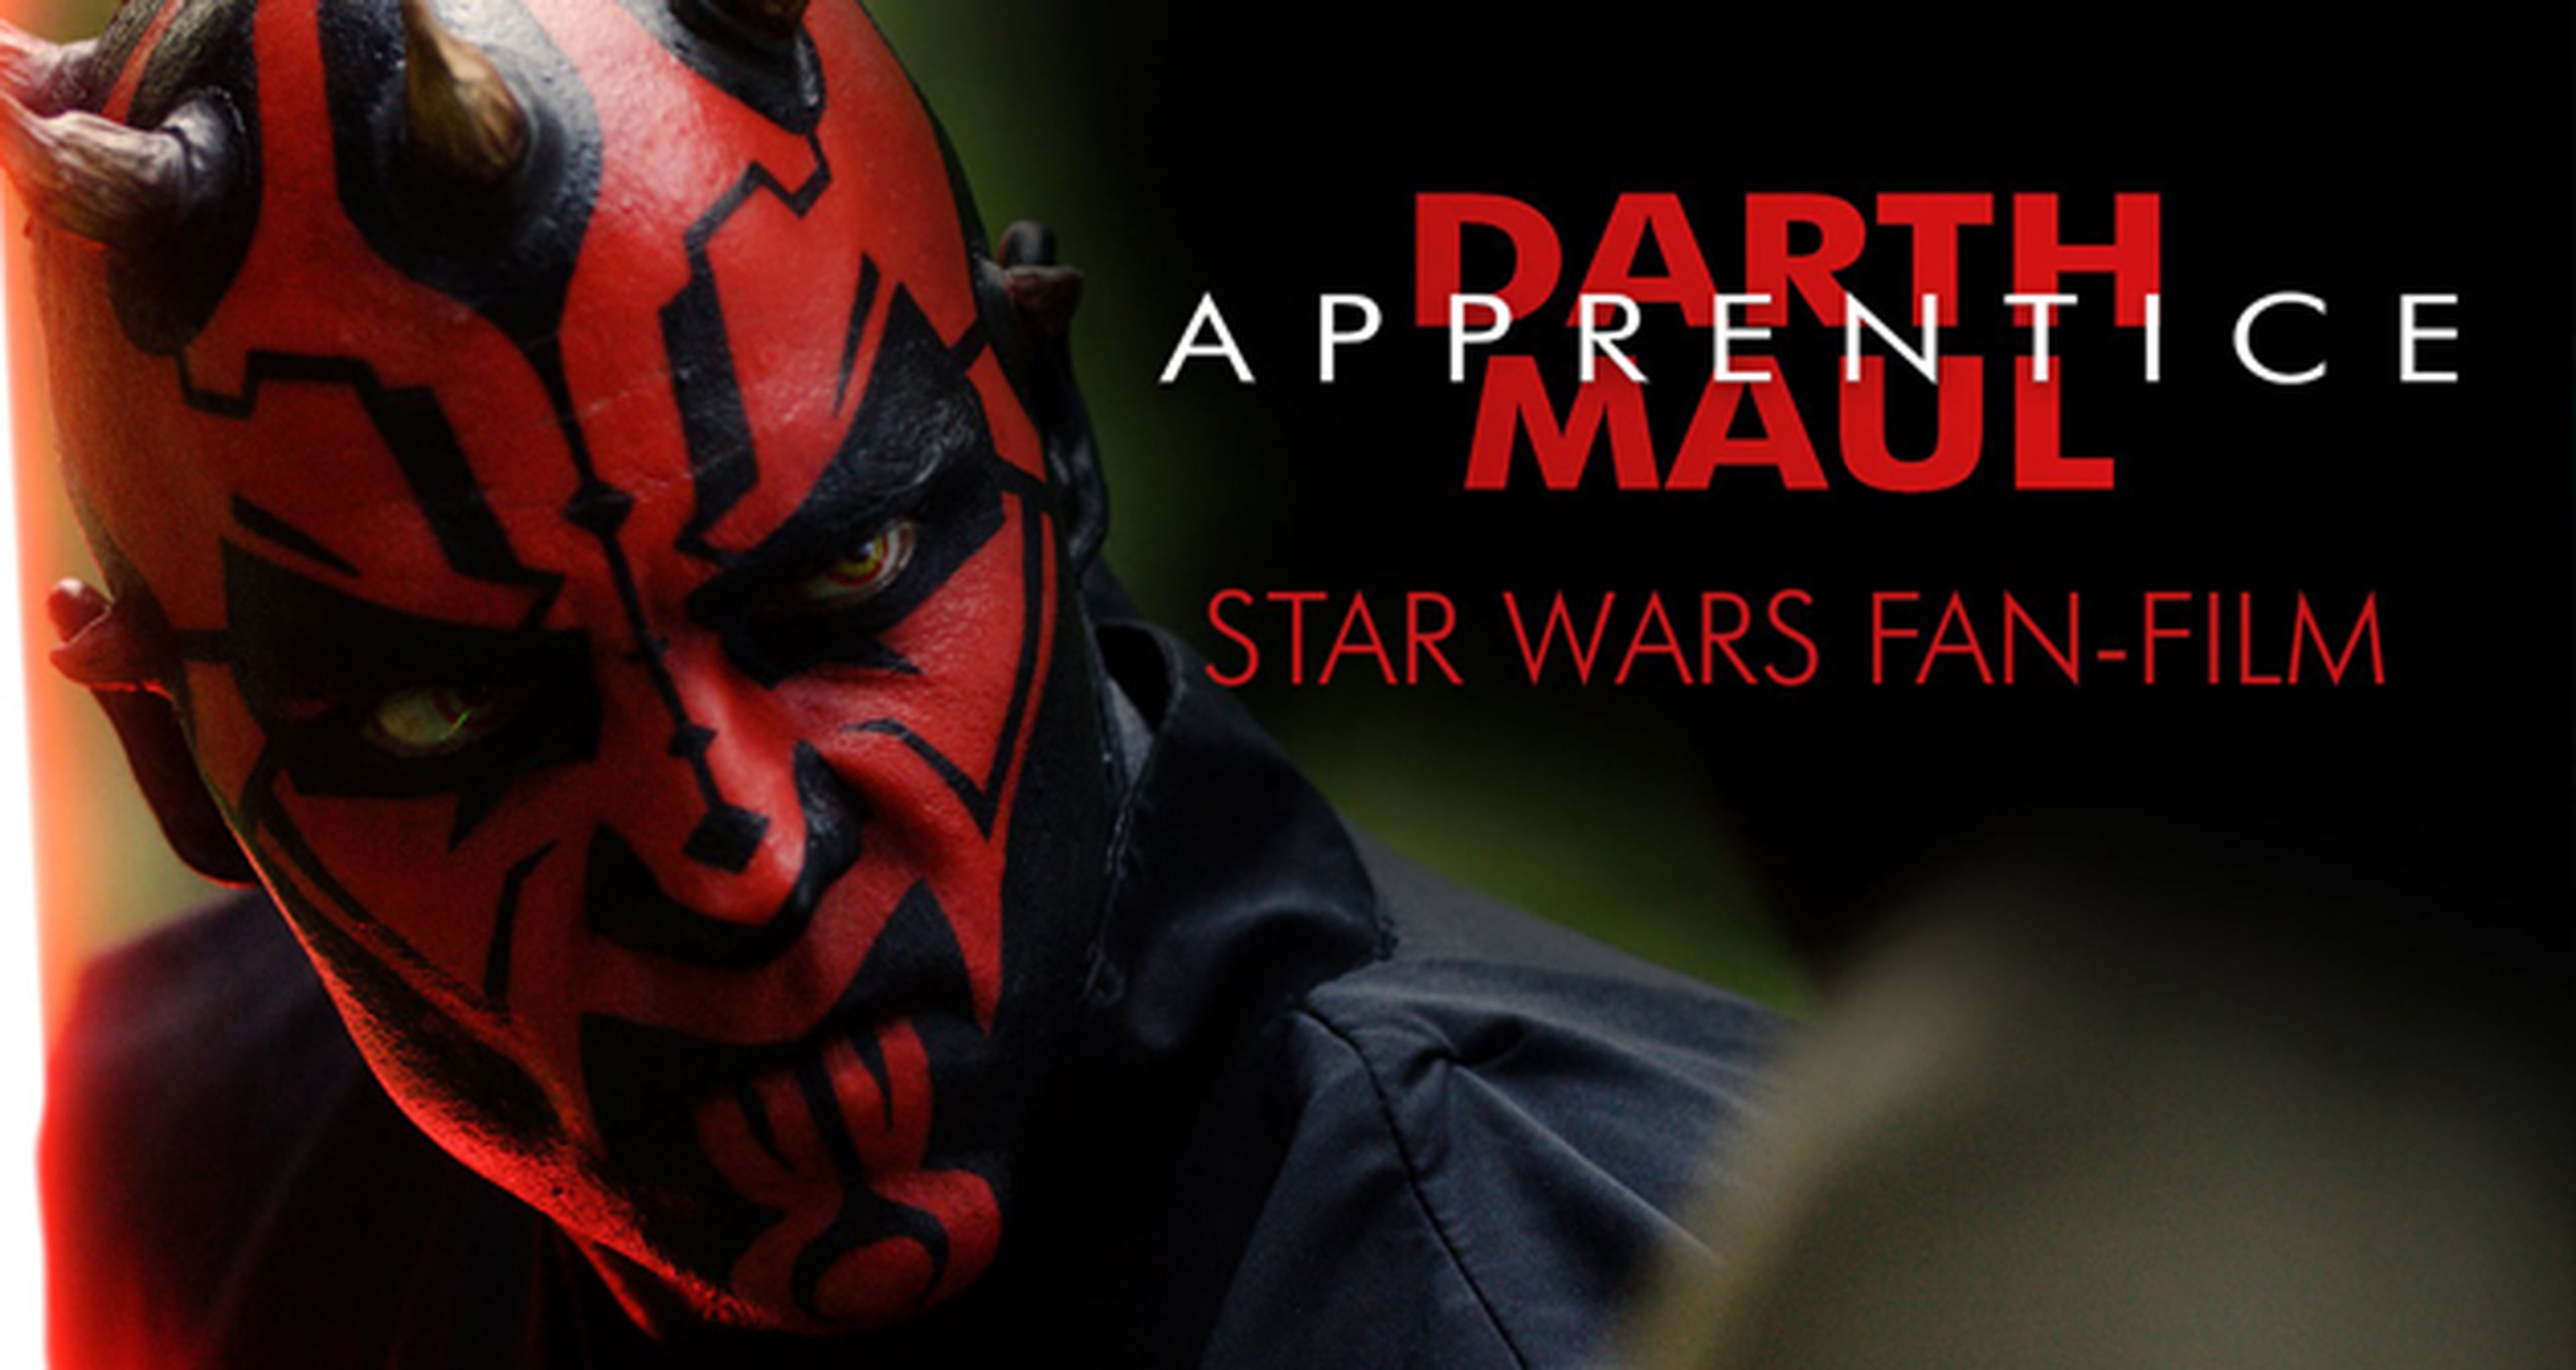 Star Wars - Darth Maul: Apprentice. Darth Maul vuelve en un fan film